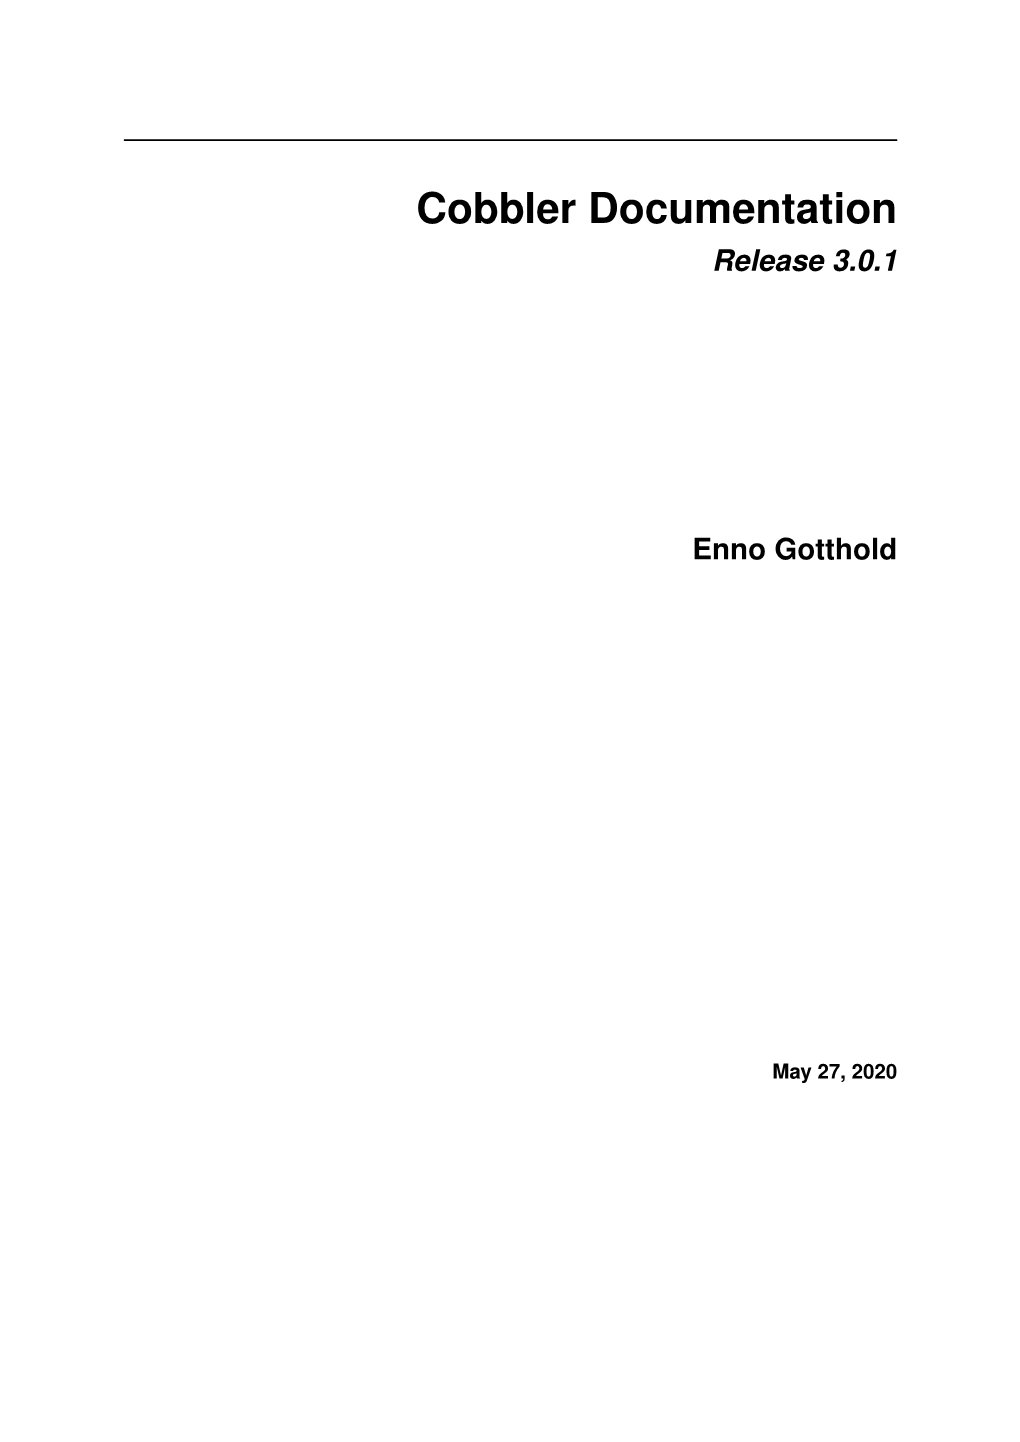 Cobbler Documentation Release 3.0.1